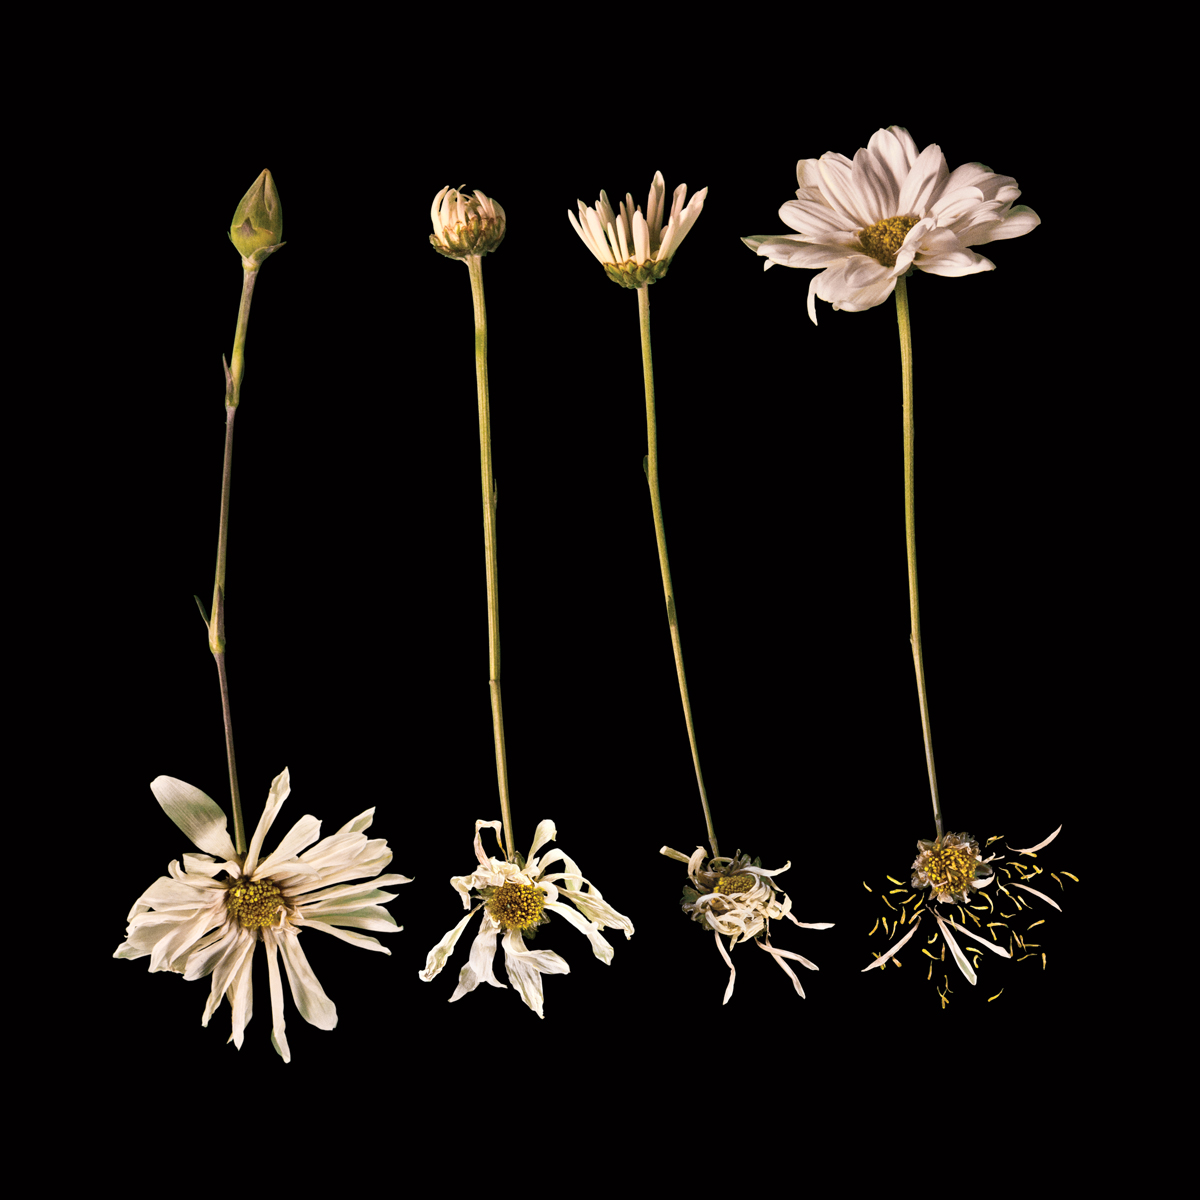 Radiohead - "Lotus Flower" (Video)